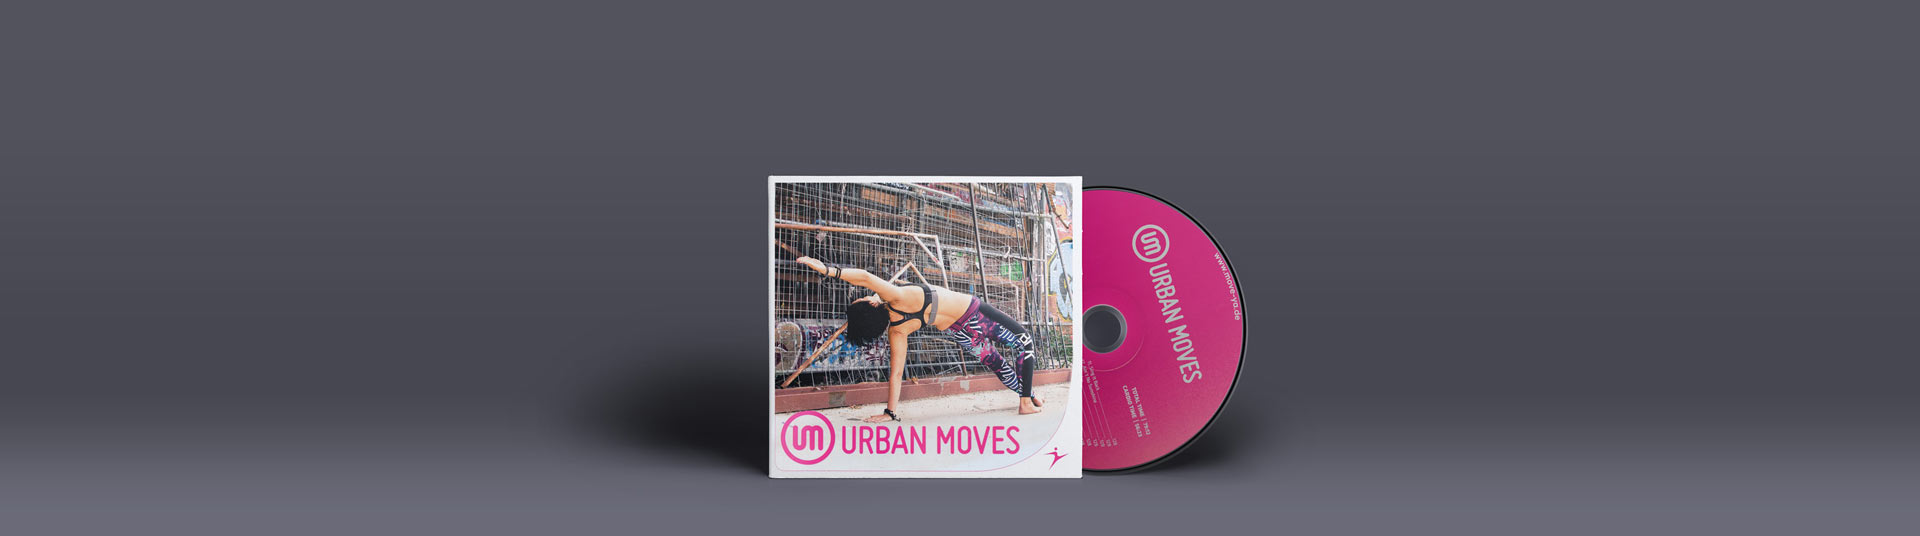 Urban moves CD